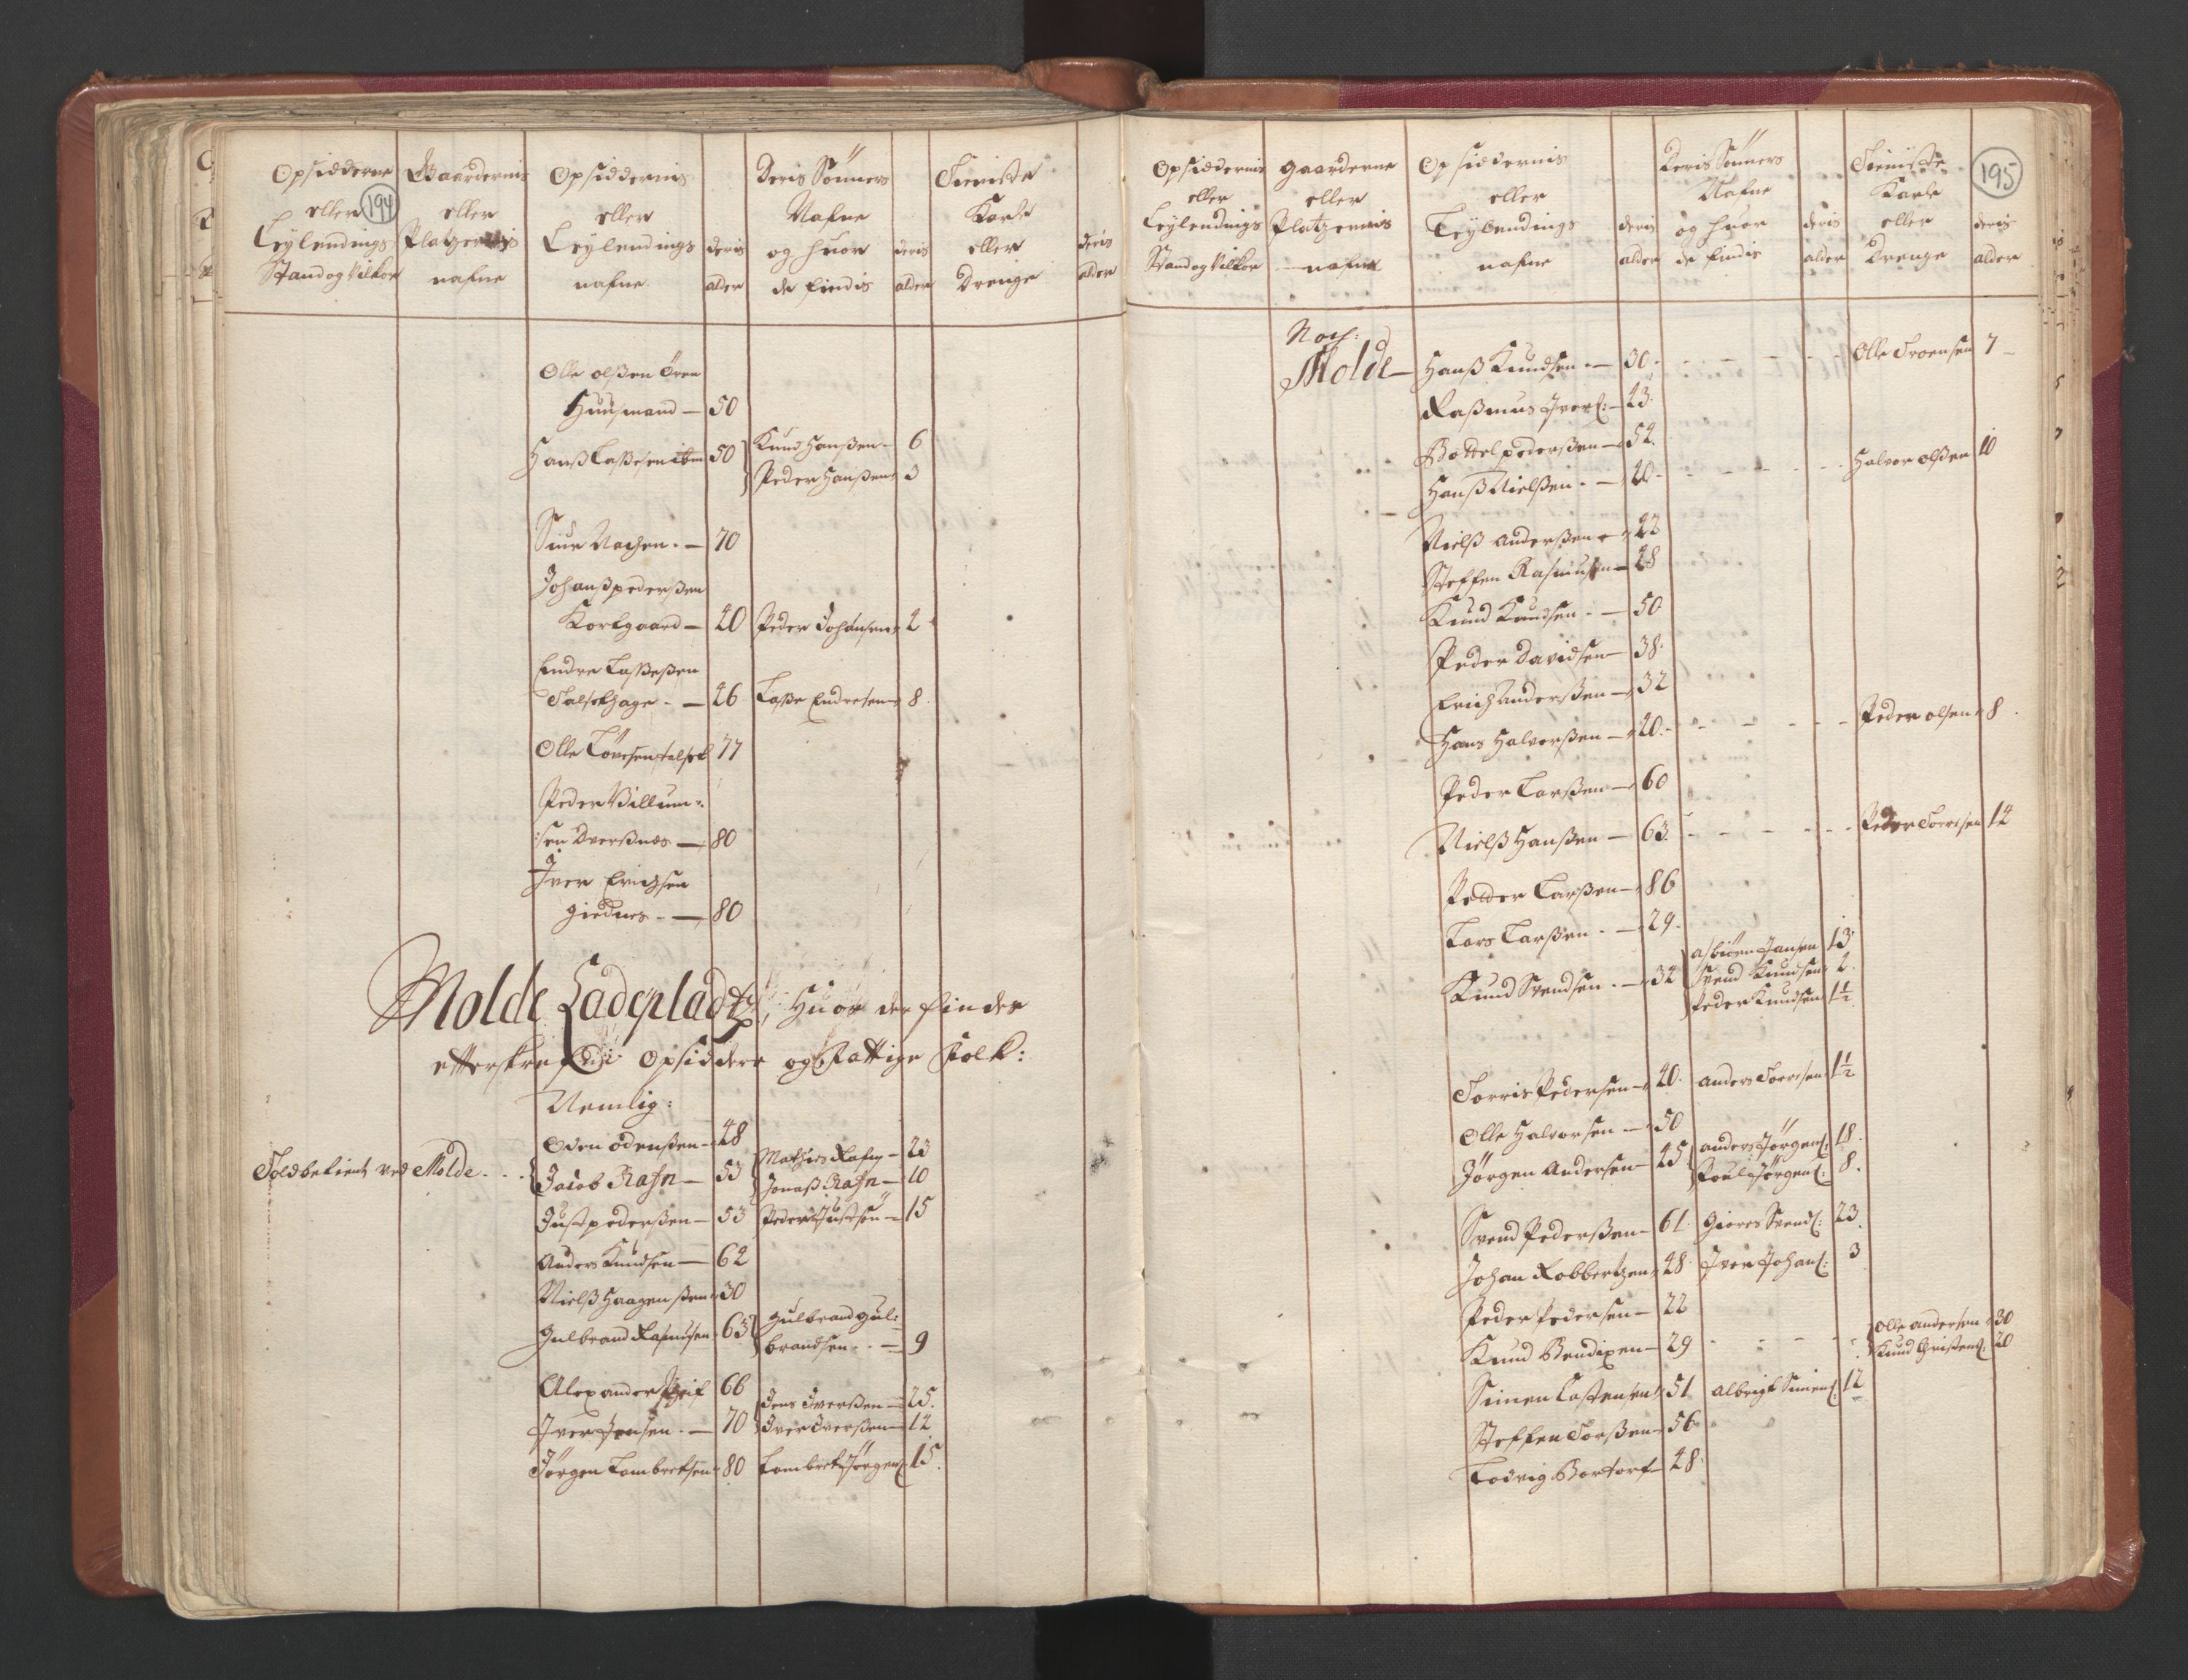 RA, Census (manntall) 1701, no. 11: Nordmøre fogderi and Romsdal fogderi, 1701, p. 194-195